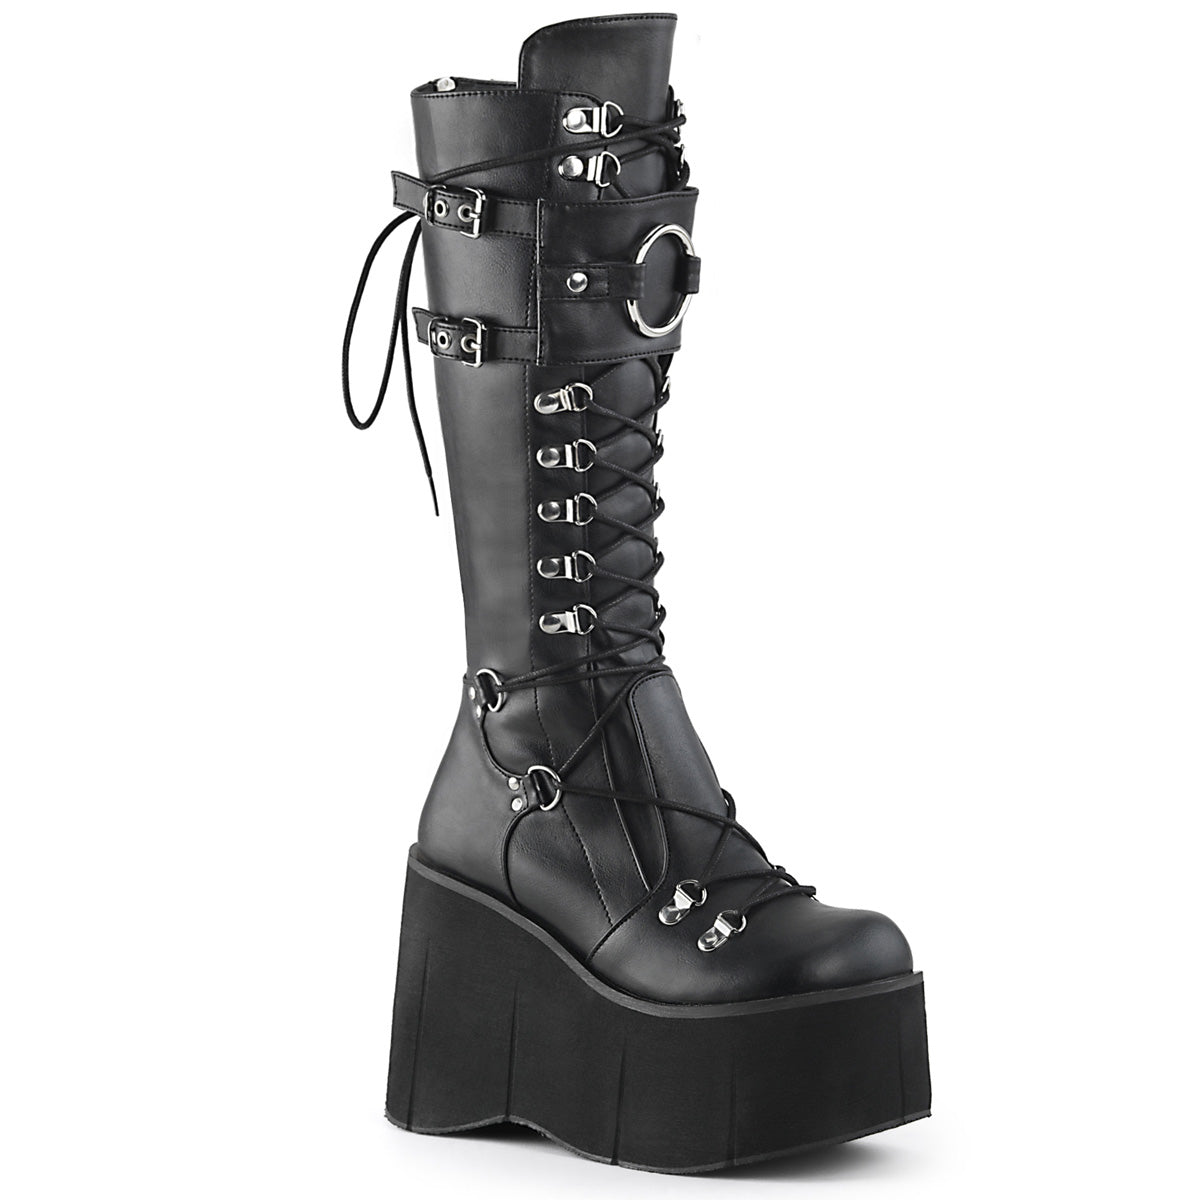 KERA-200 Alternative Footwear Demonia Women's Mid-Calf & Knee High Boots Blk Vegan Leather